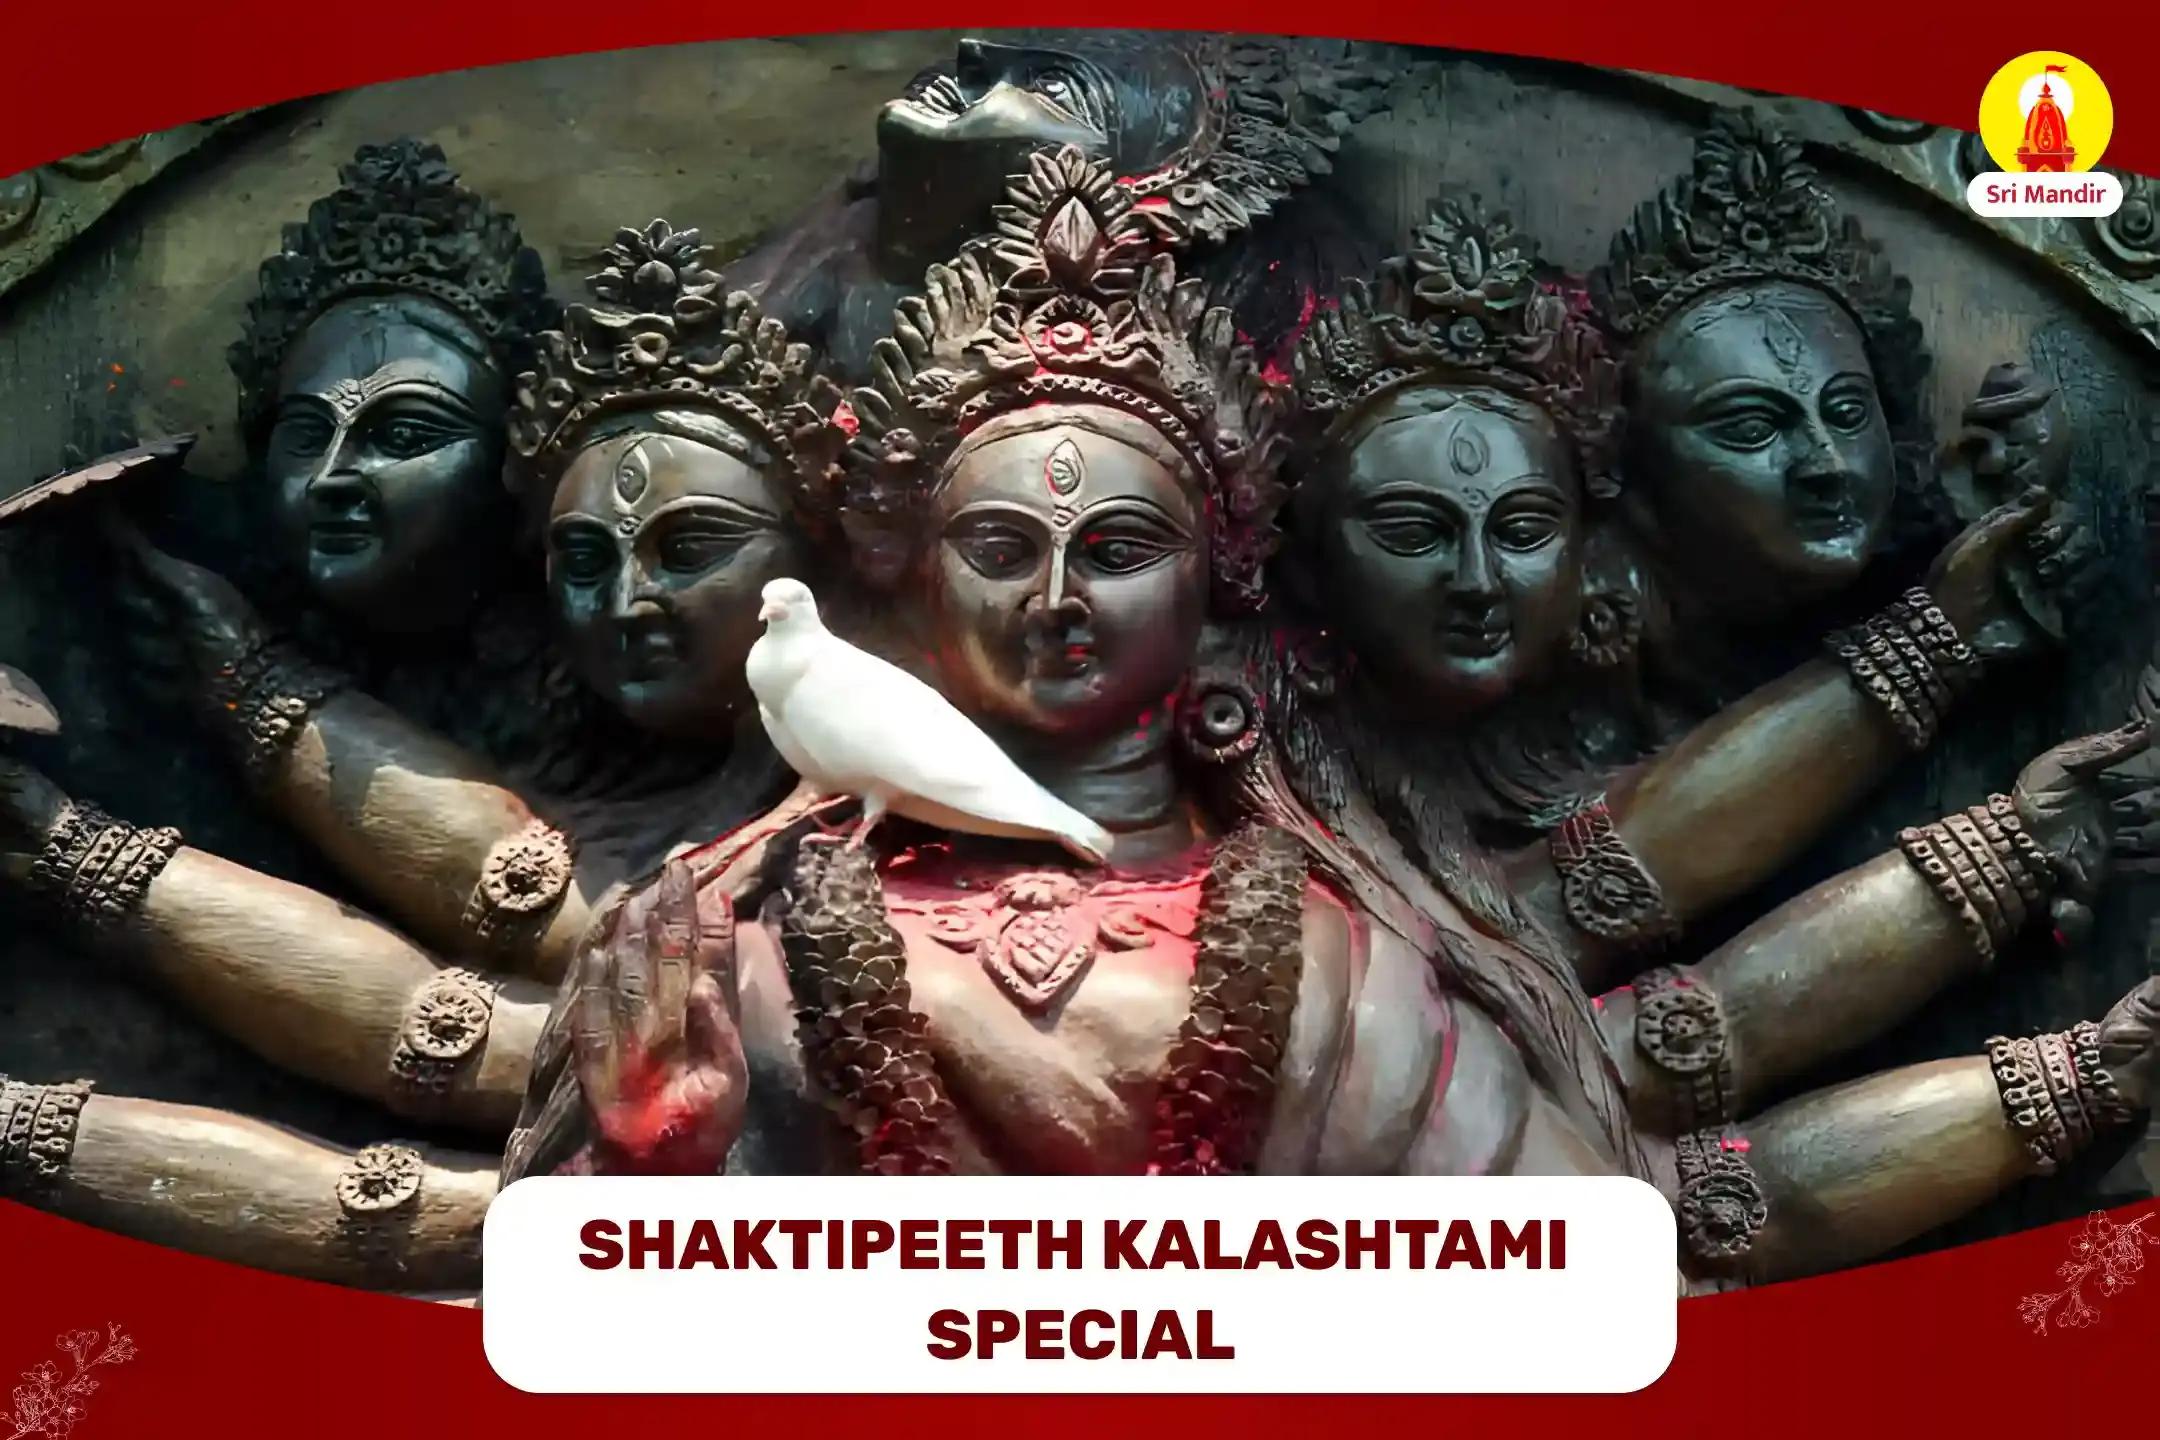 Shaktipeeth Kalashtami Special Maa Kamakhya Tantrokta Maha Yagya To Achieve Bliss in Relationship and Resolve Conflicts